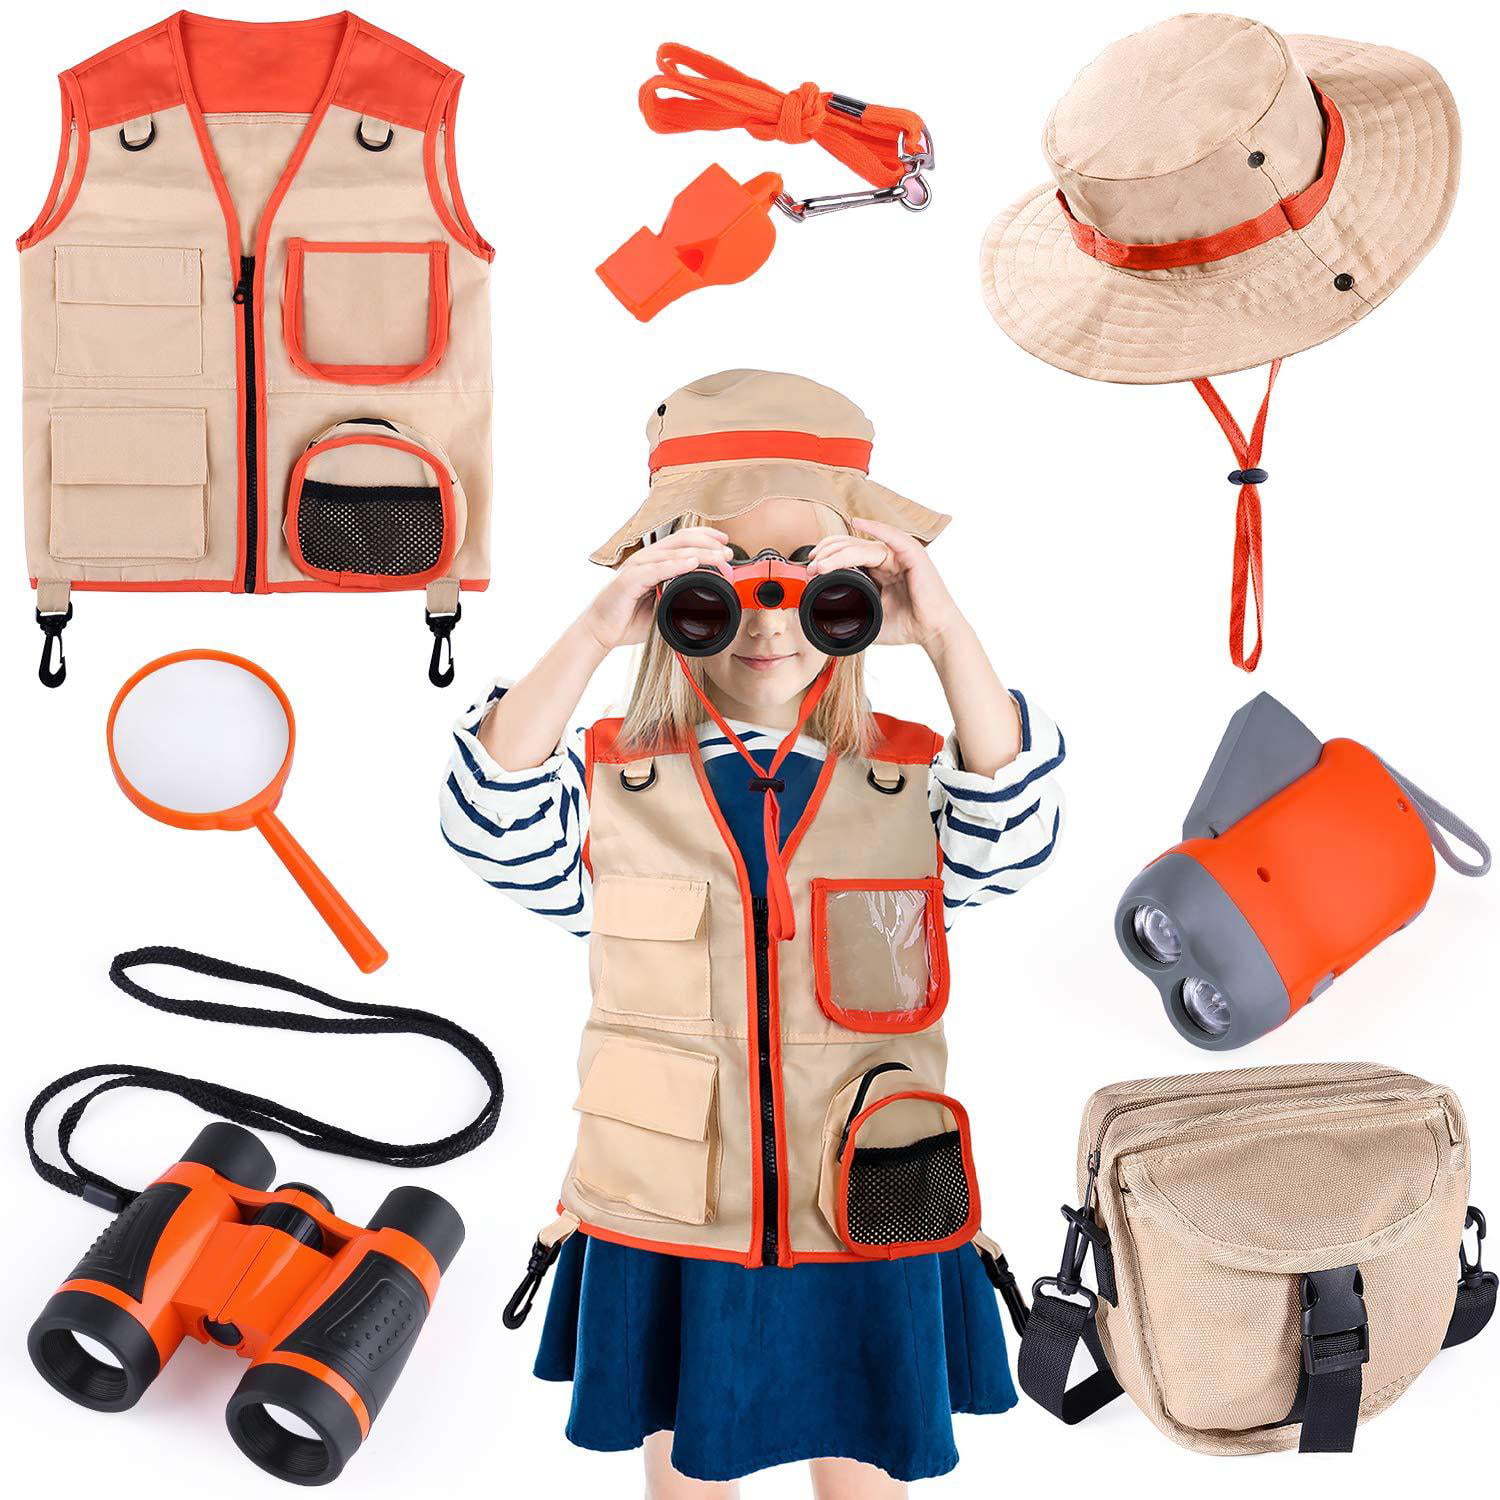 Kids Explorer Kit, 7 Pcs Outdoor Exploration Kit with Binoculars 